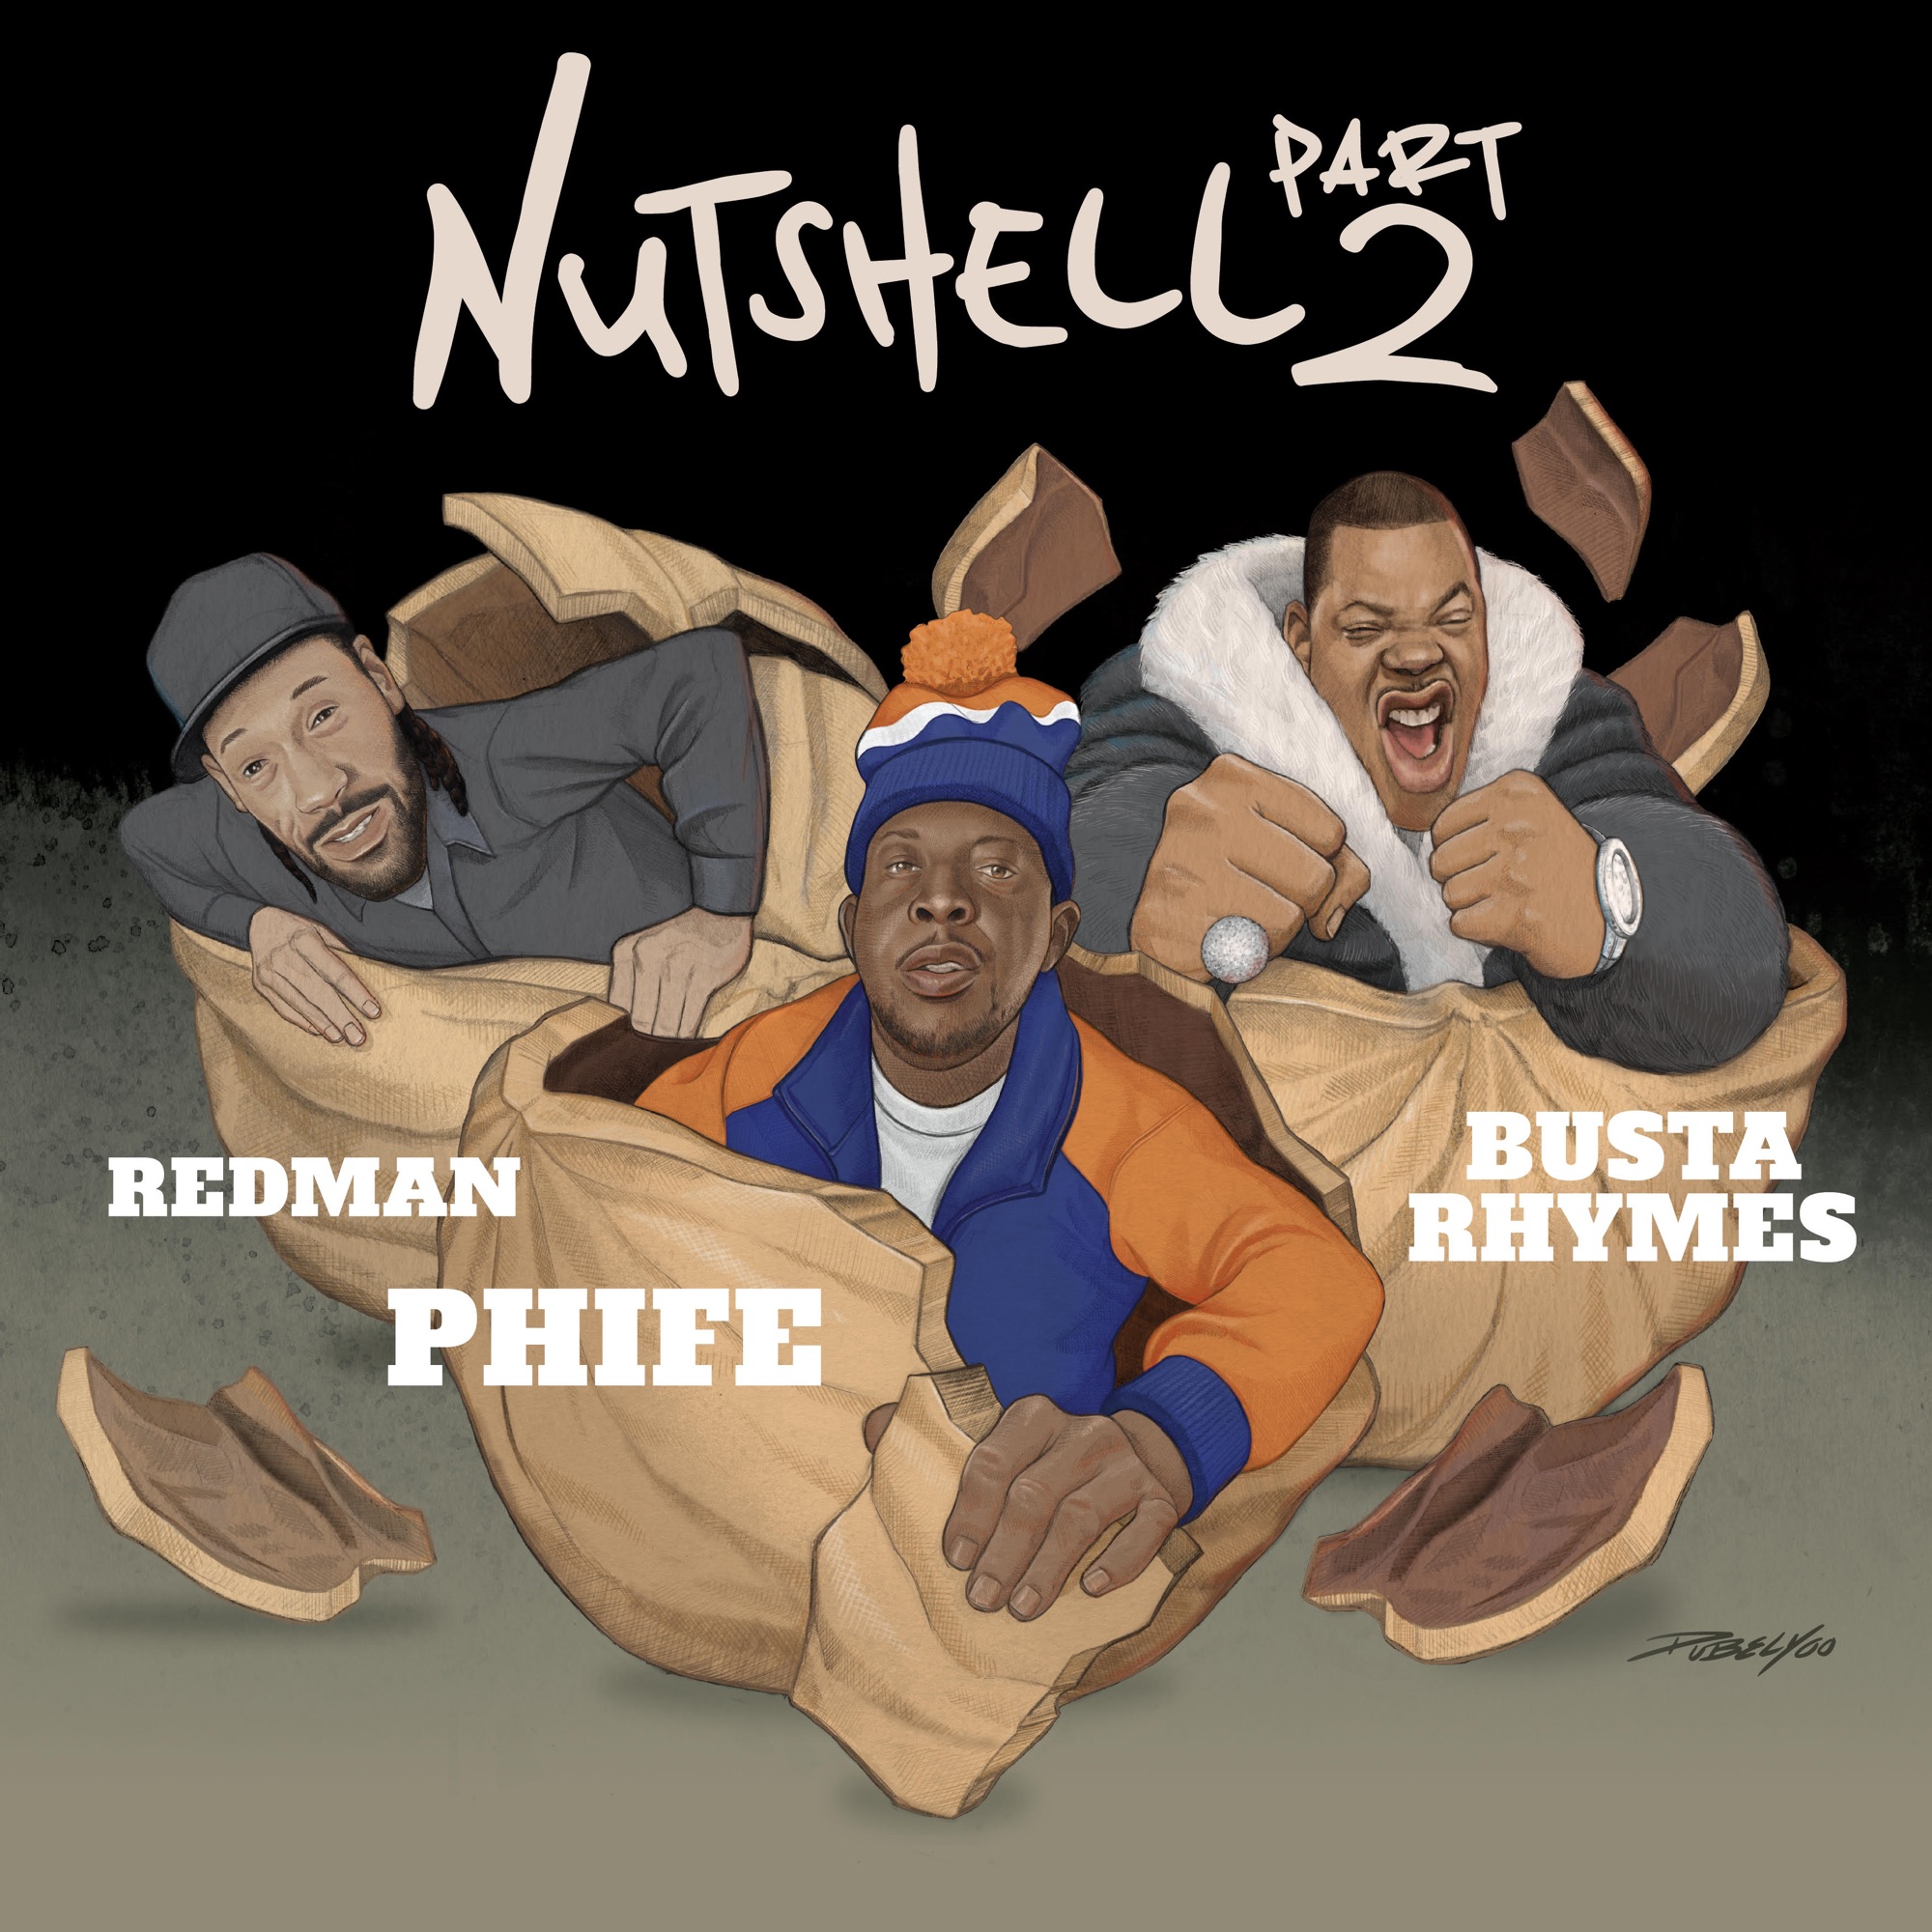 Phife Dawg - Nutshell Pt. 2 (feat. Busta Rhymes & Redman) - Single